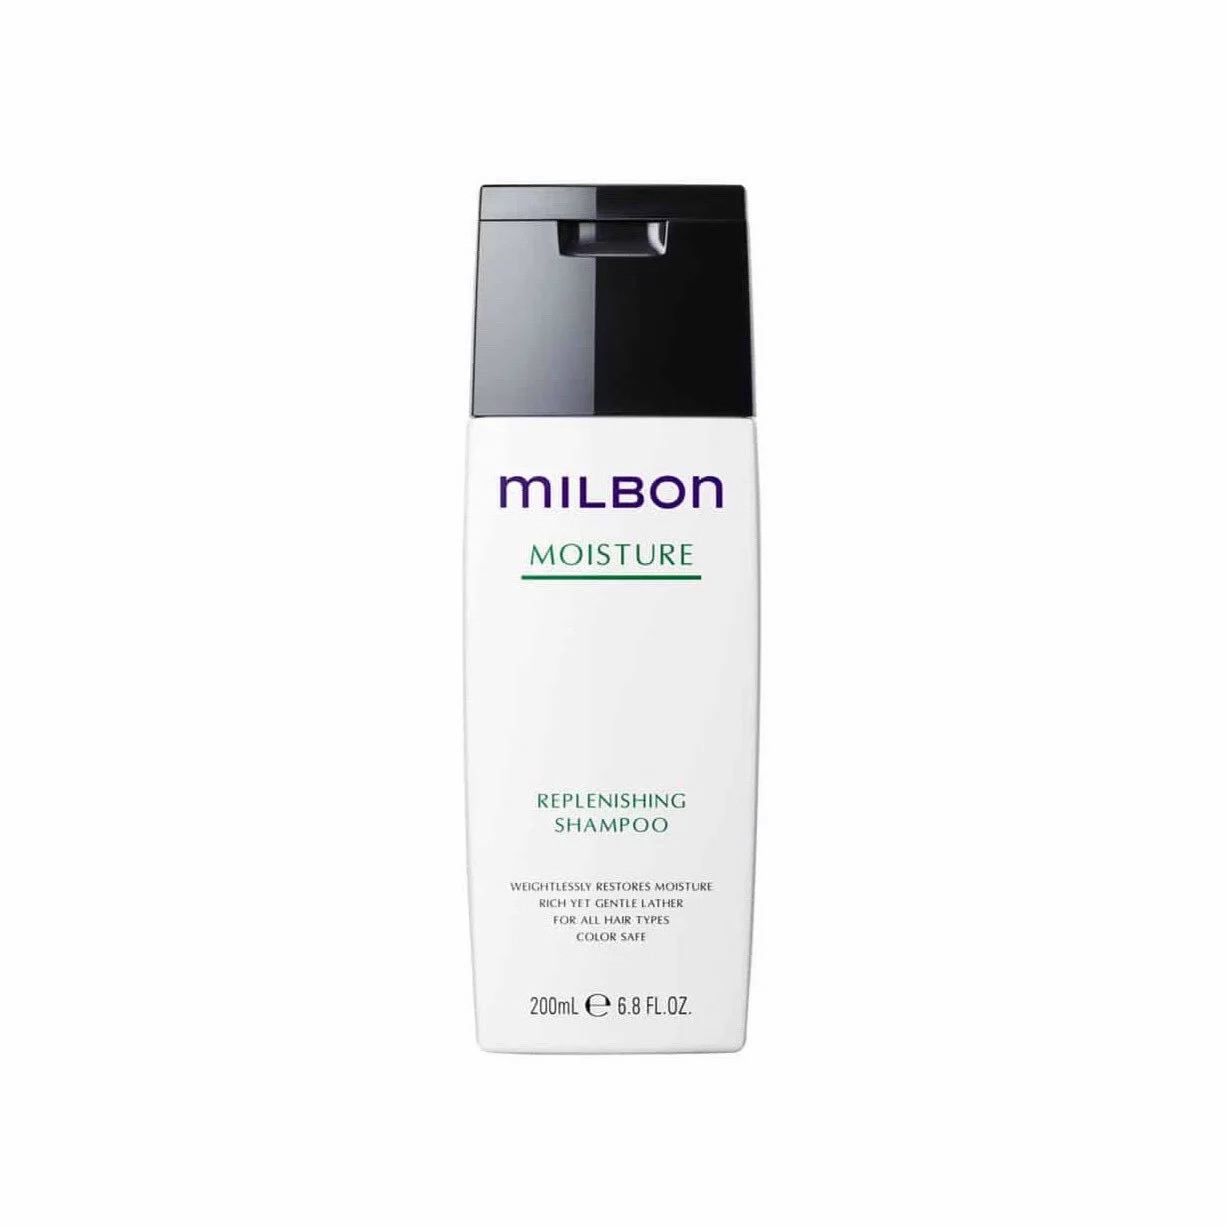 Milbon-replenishing-shampoo-200ml.